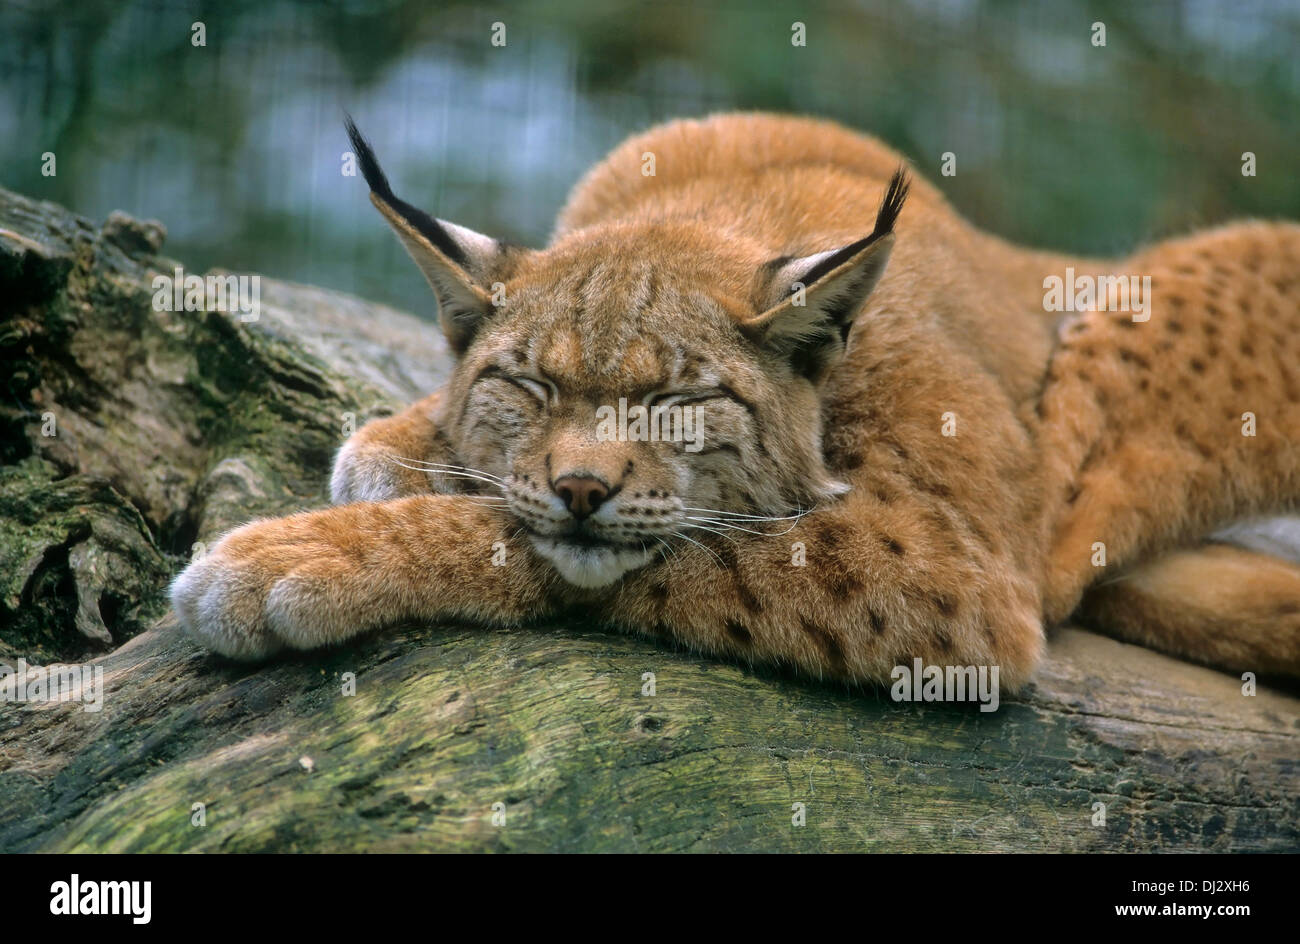 El lince eurásico (Lynx lynx), Europäischer Luchs, Eurasischer Luchs (Lynx lynx) Foto de stock